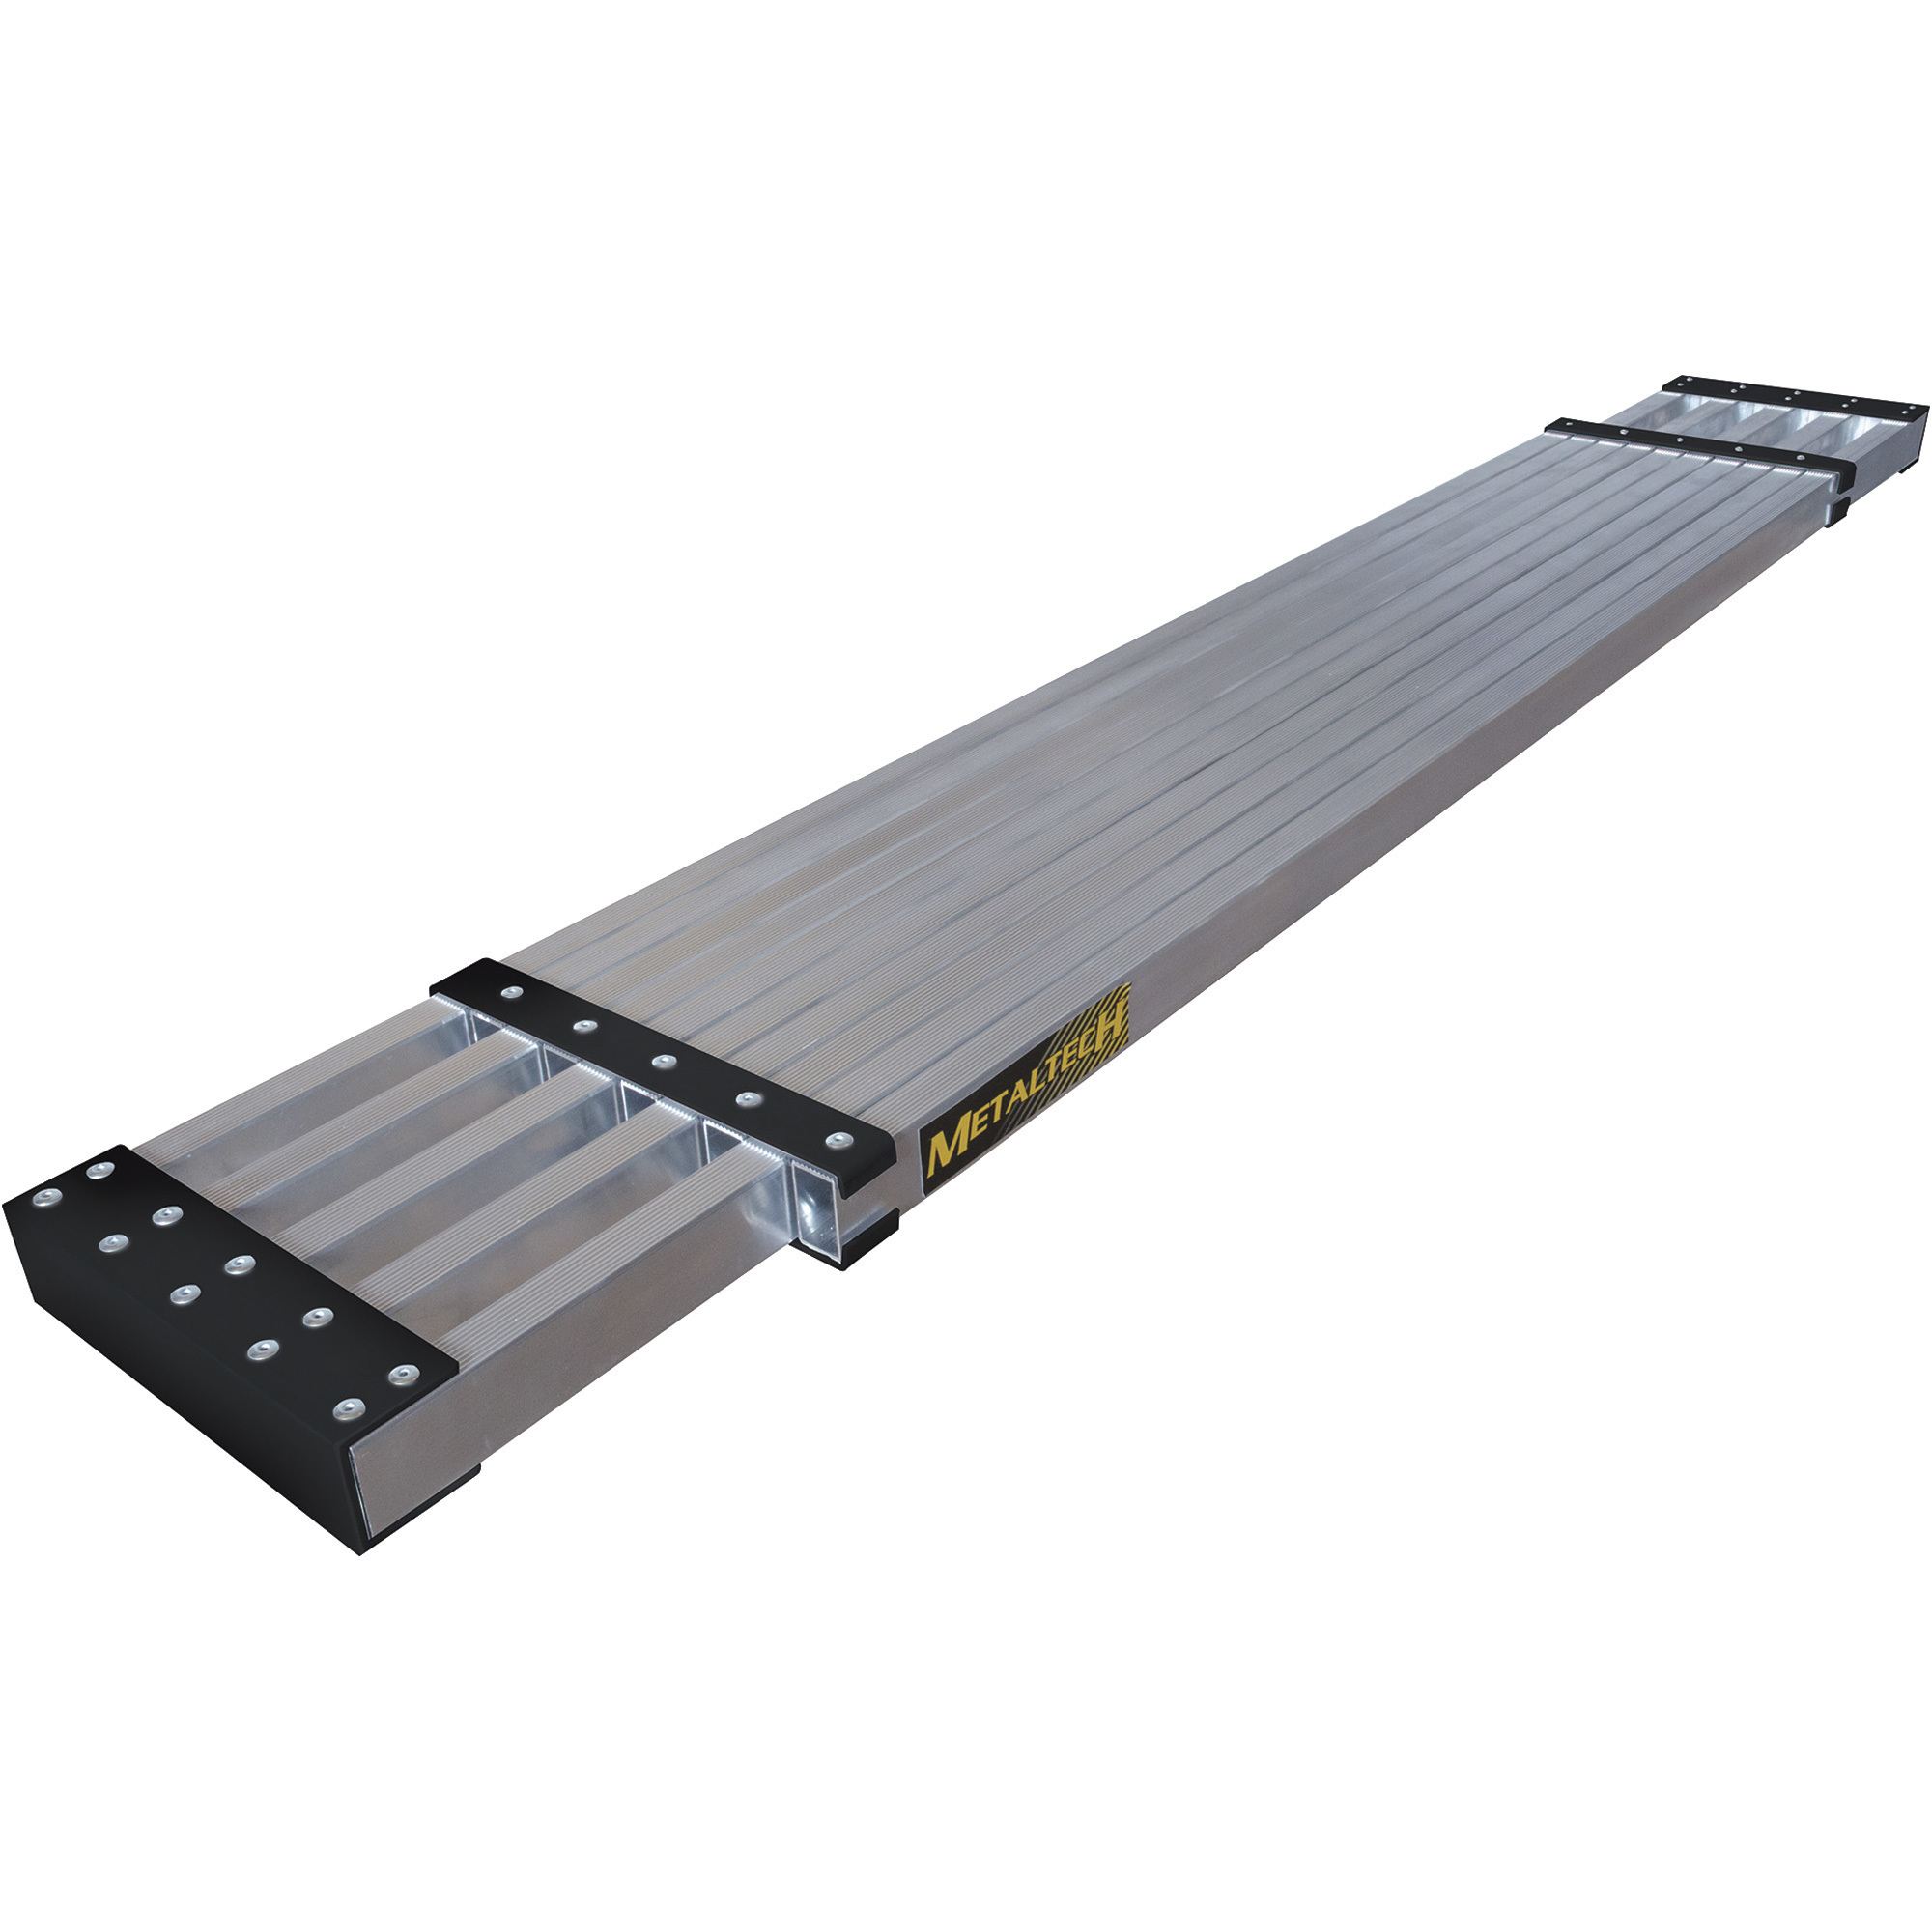 Metaltech Telescoping Work Plank, Adjusts from 6ft. to 9ft., Model M-PEP7000AL